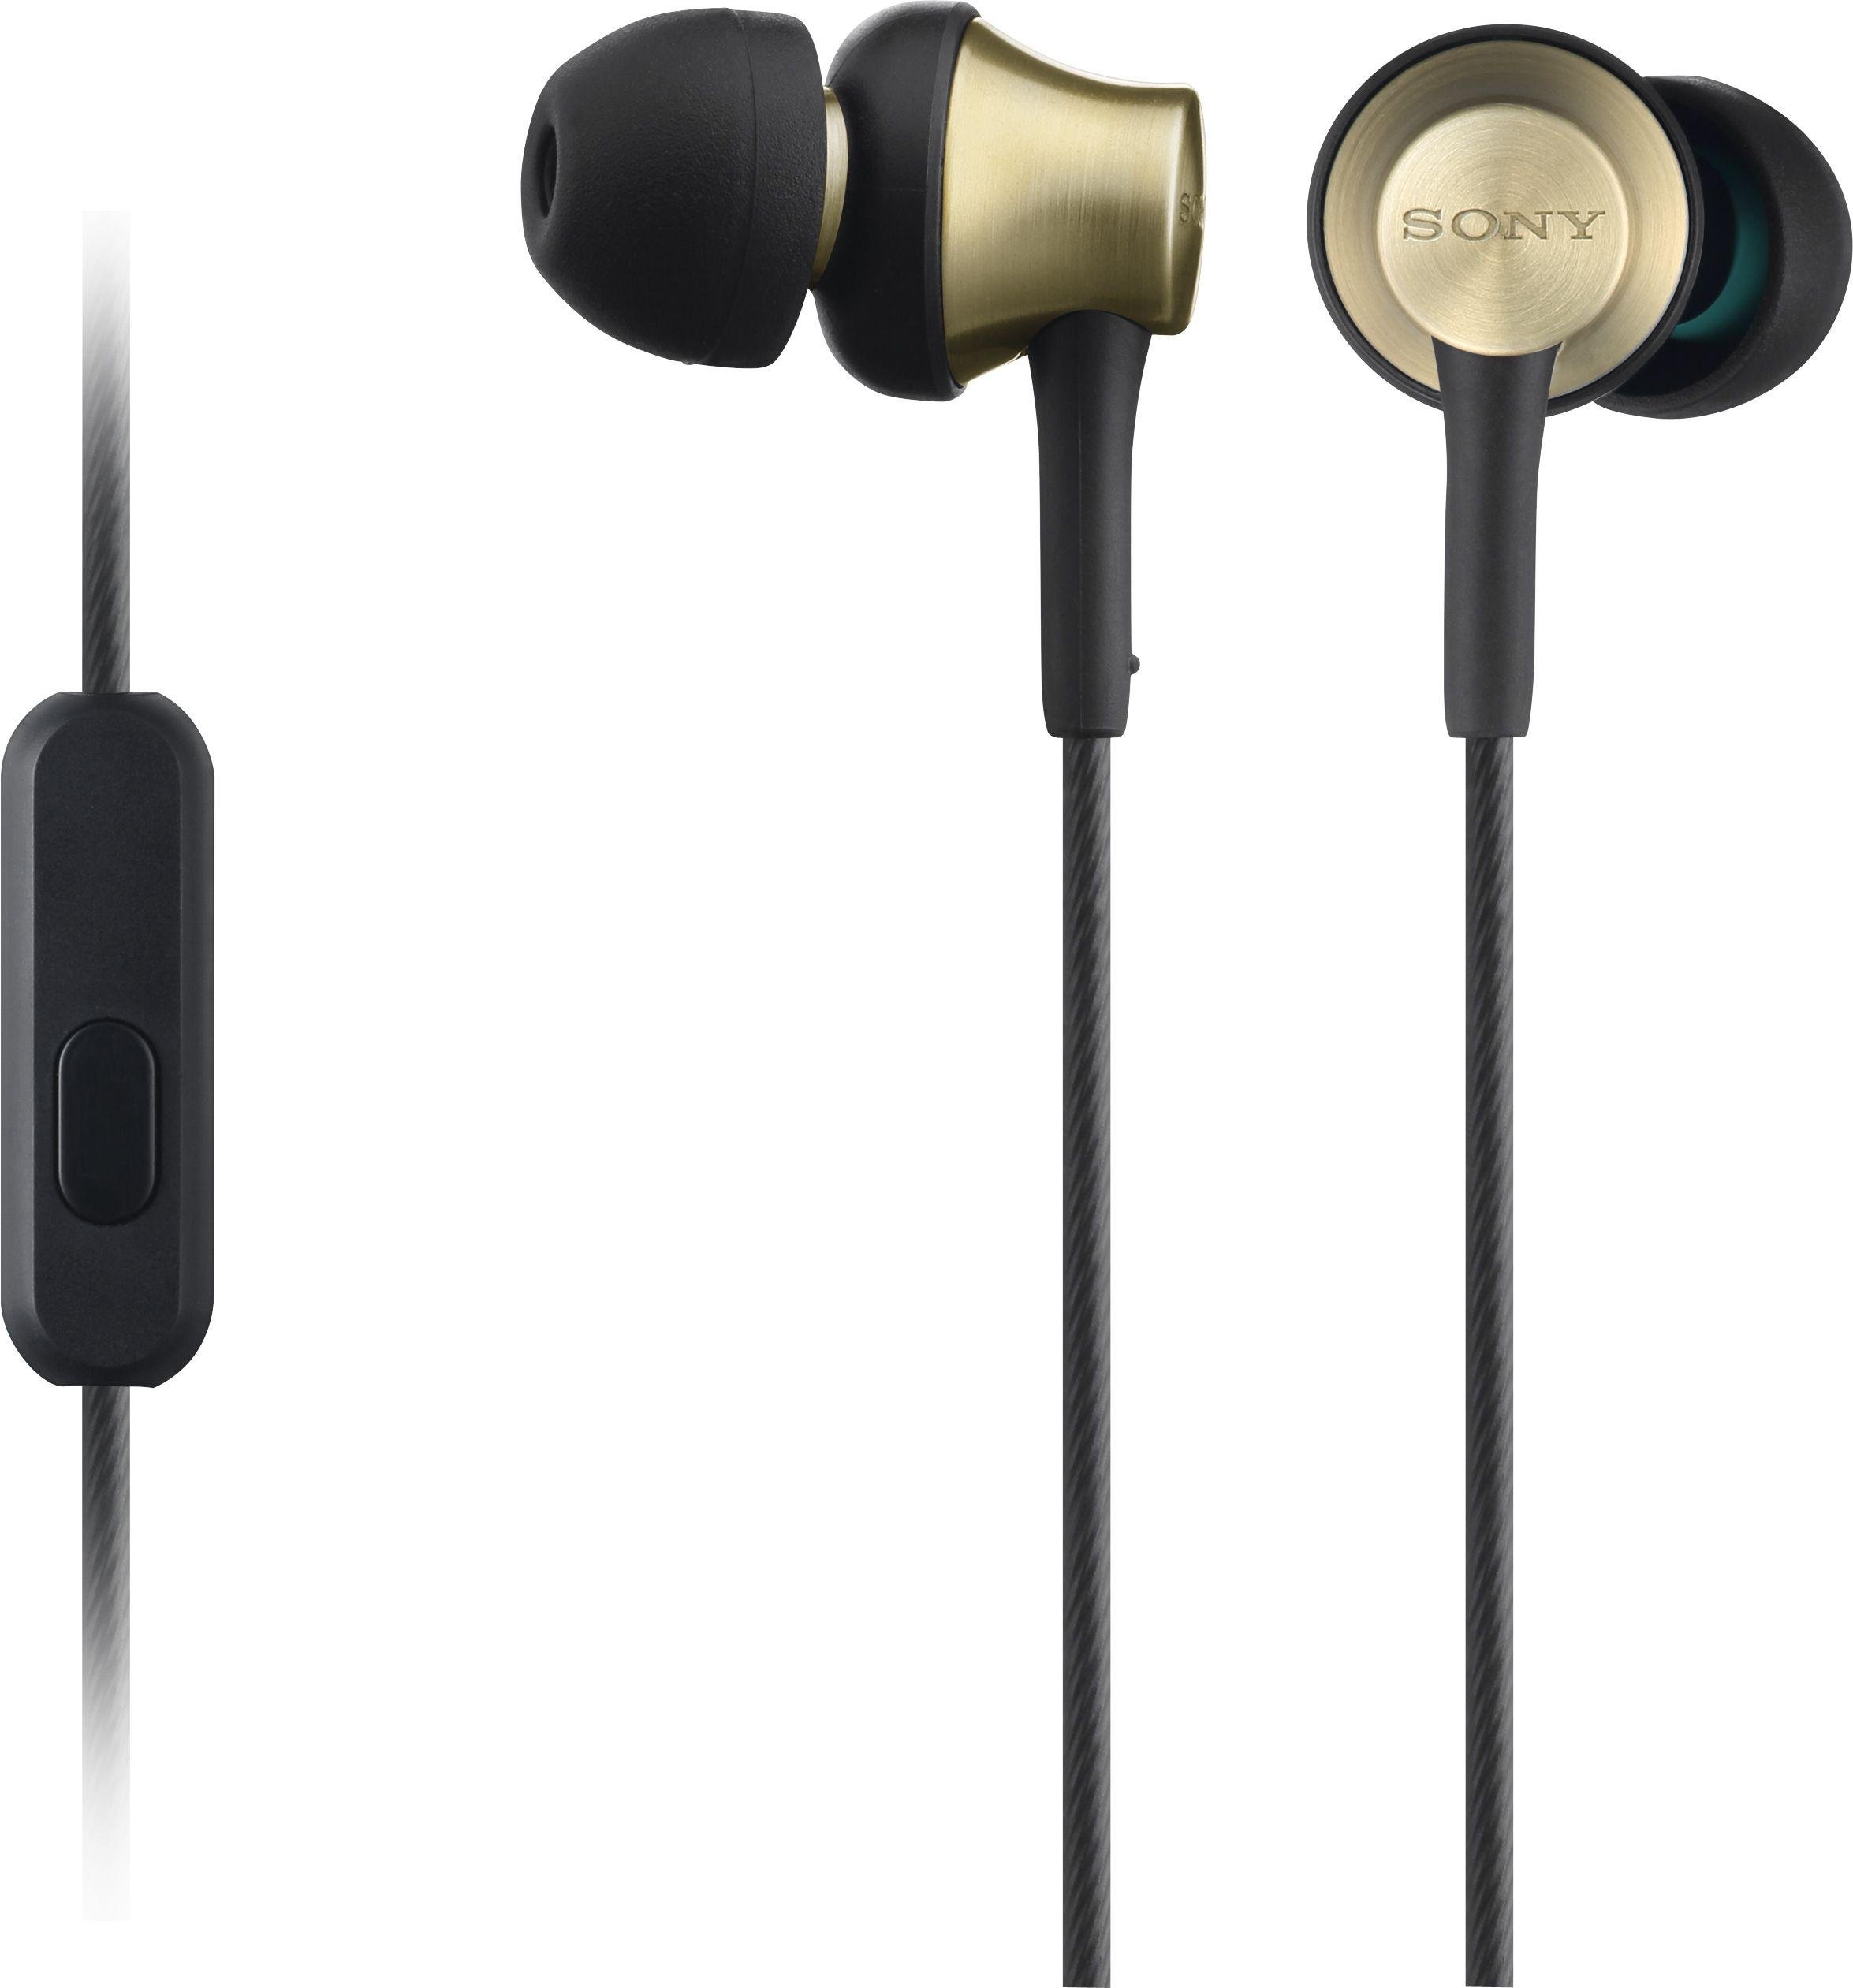 Sony MDX-EX650AP In-Ear Headphones Review